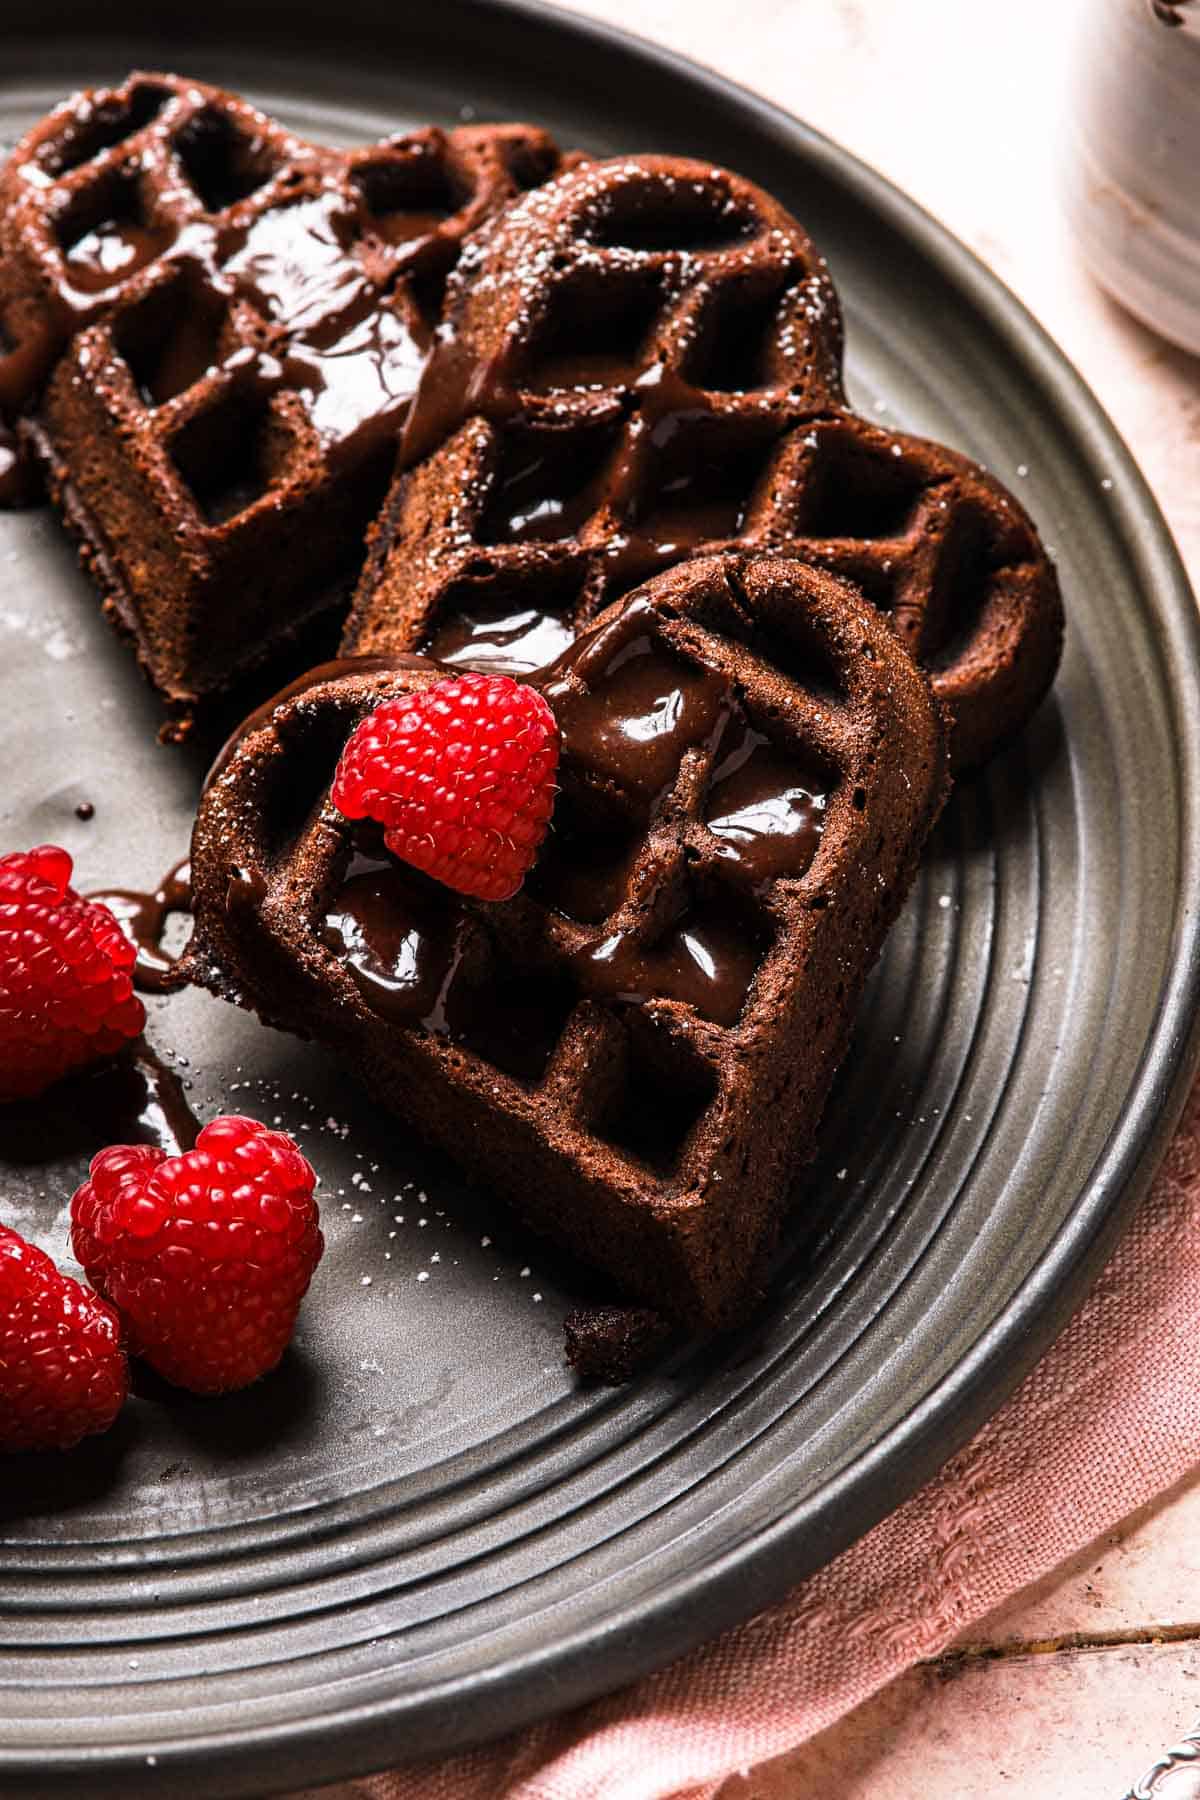 waffles with chocolate sauce and raspberries